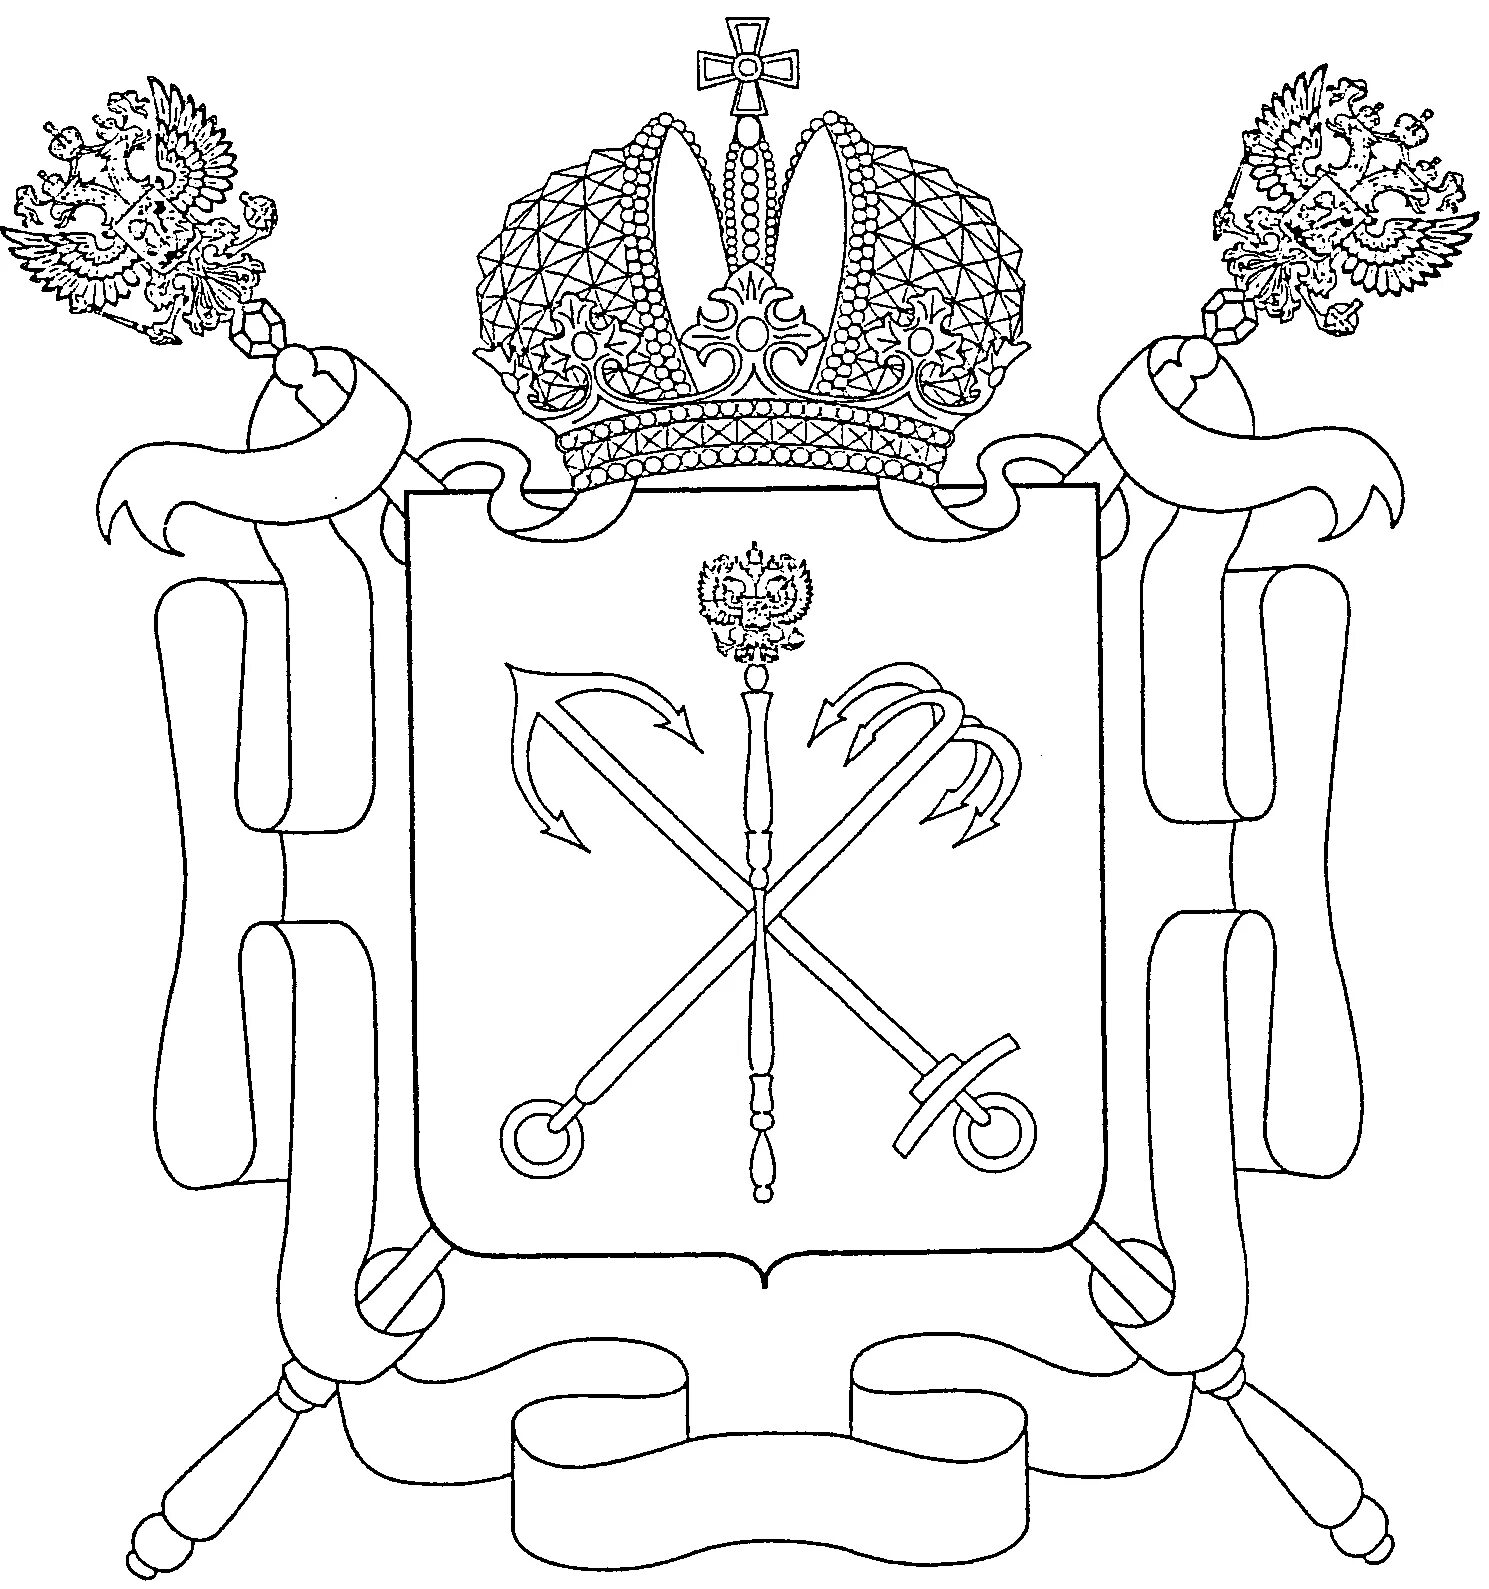 Coat of arms of St. Petersburg #9